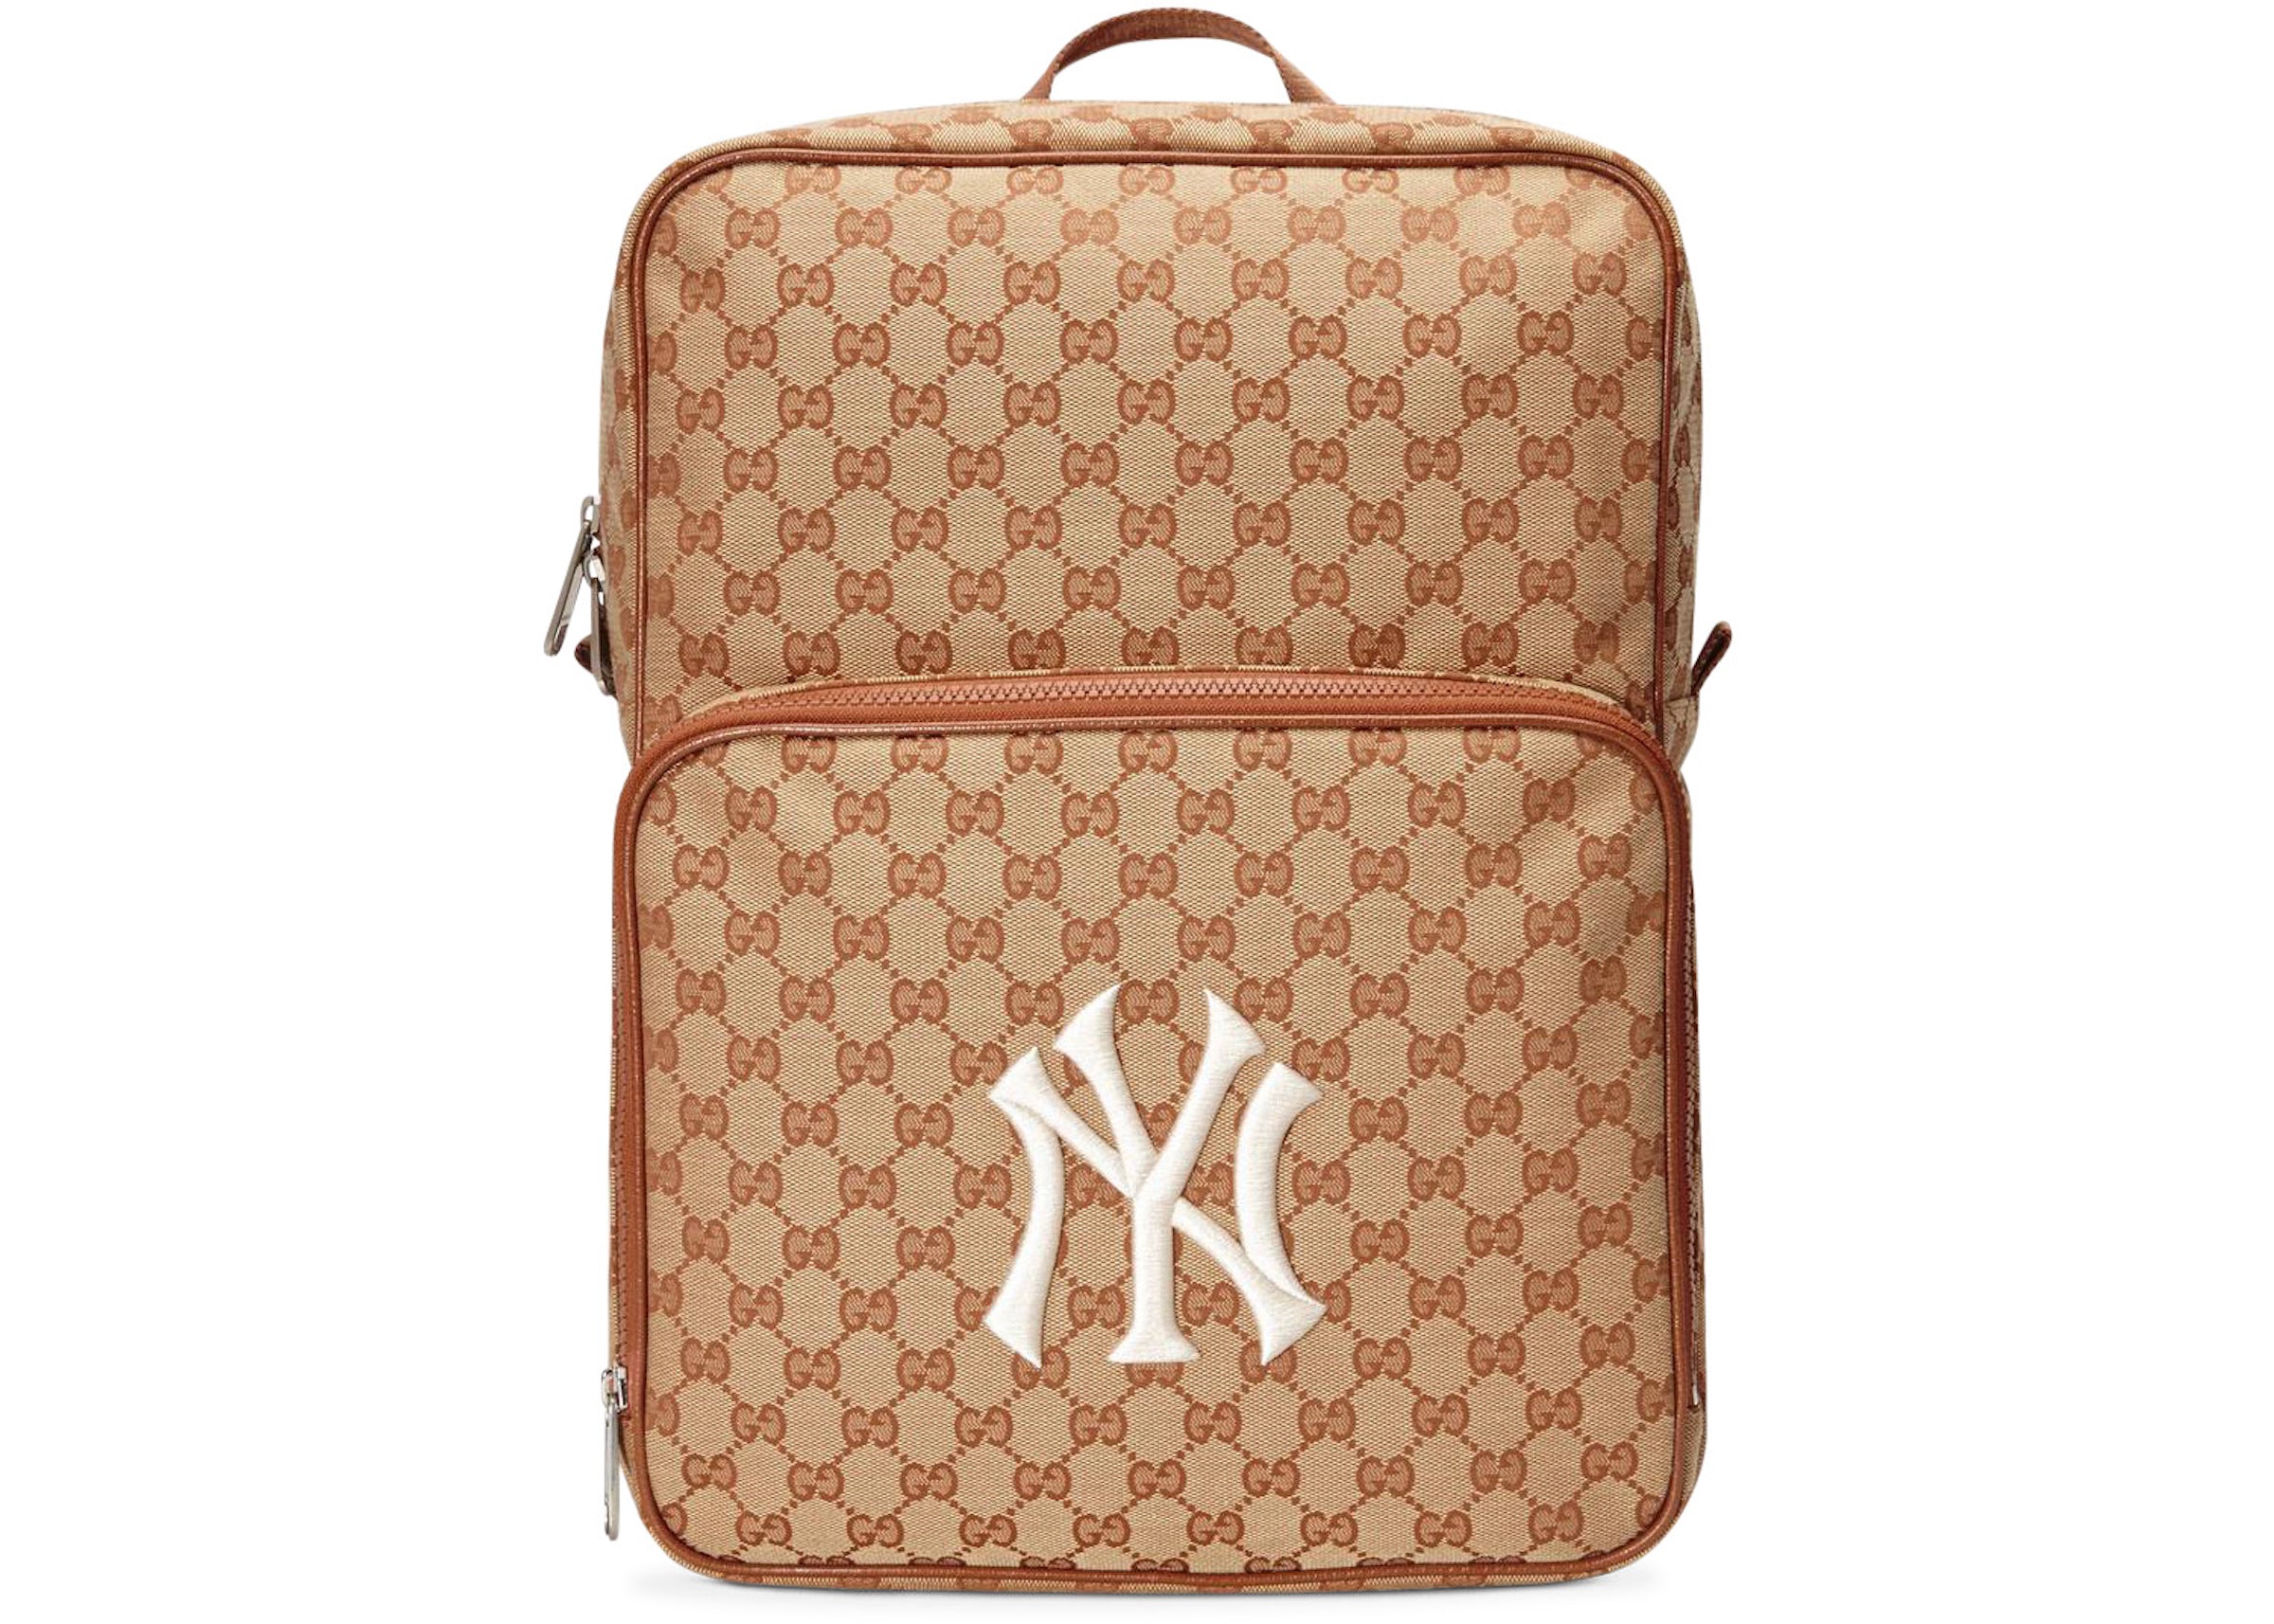 Gucci Backpack NY Yankees Medium Brick Red/Beige